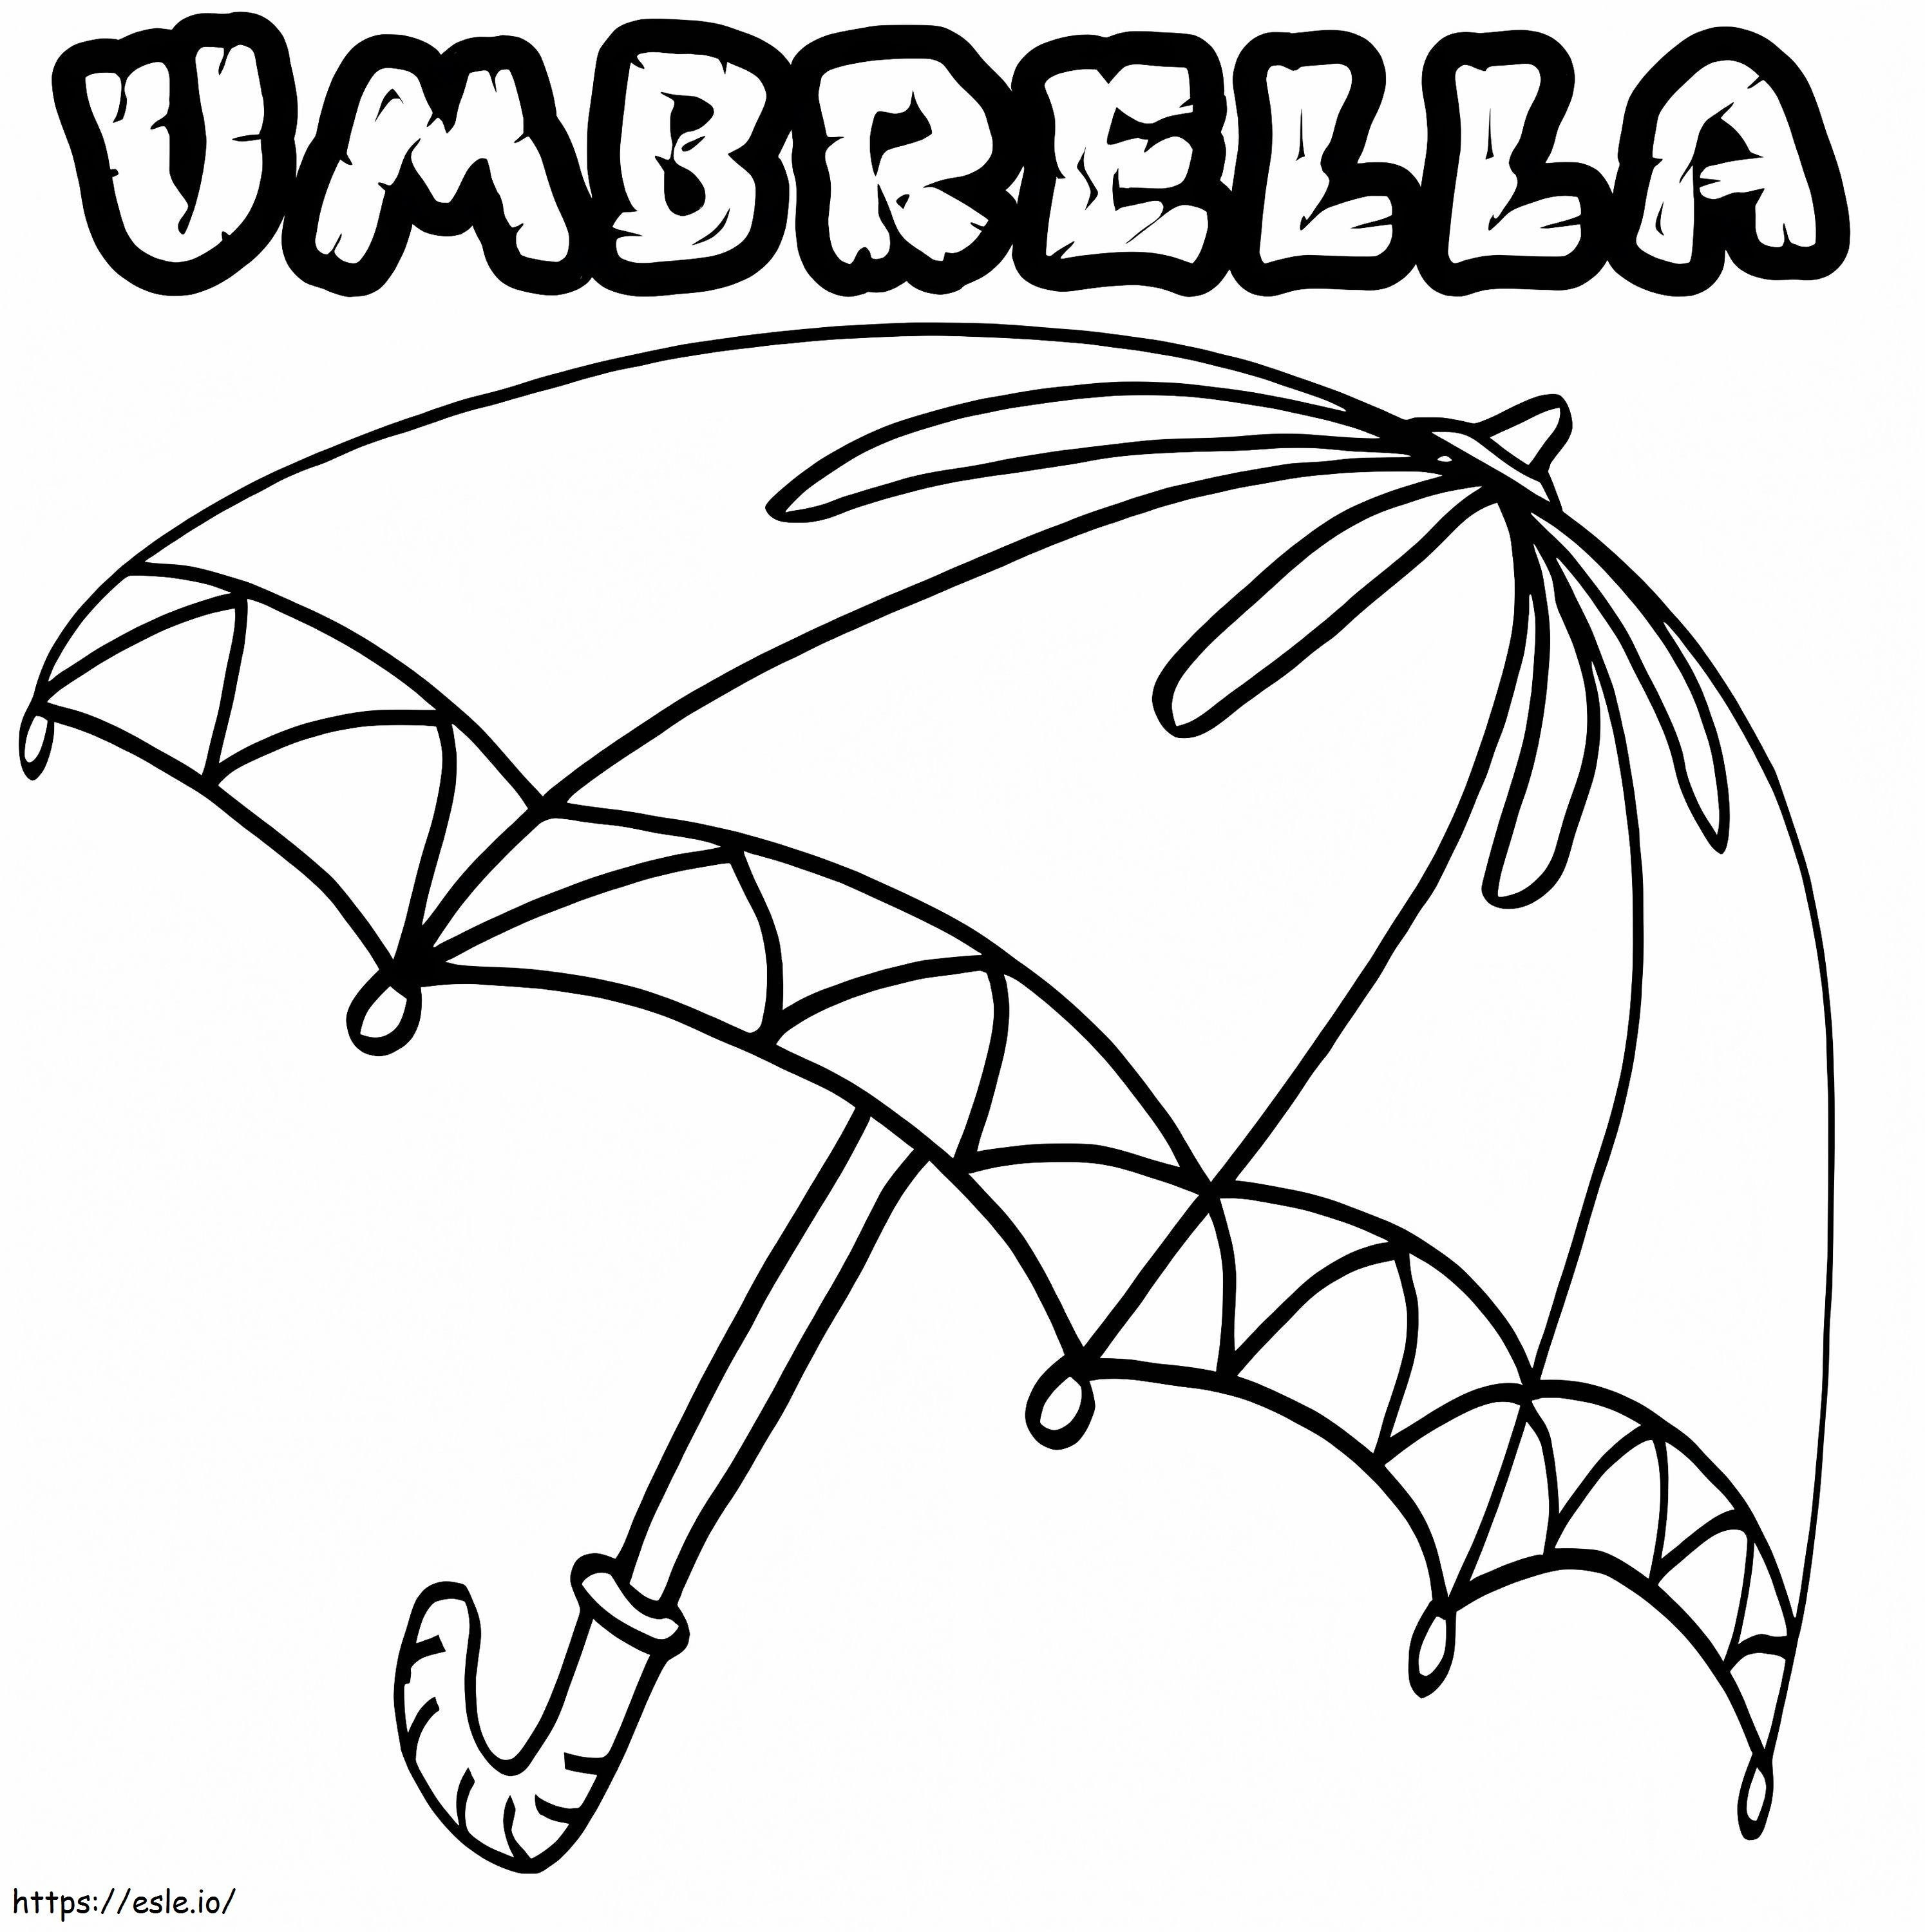 Guarda-chuva 1 para colorir